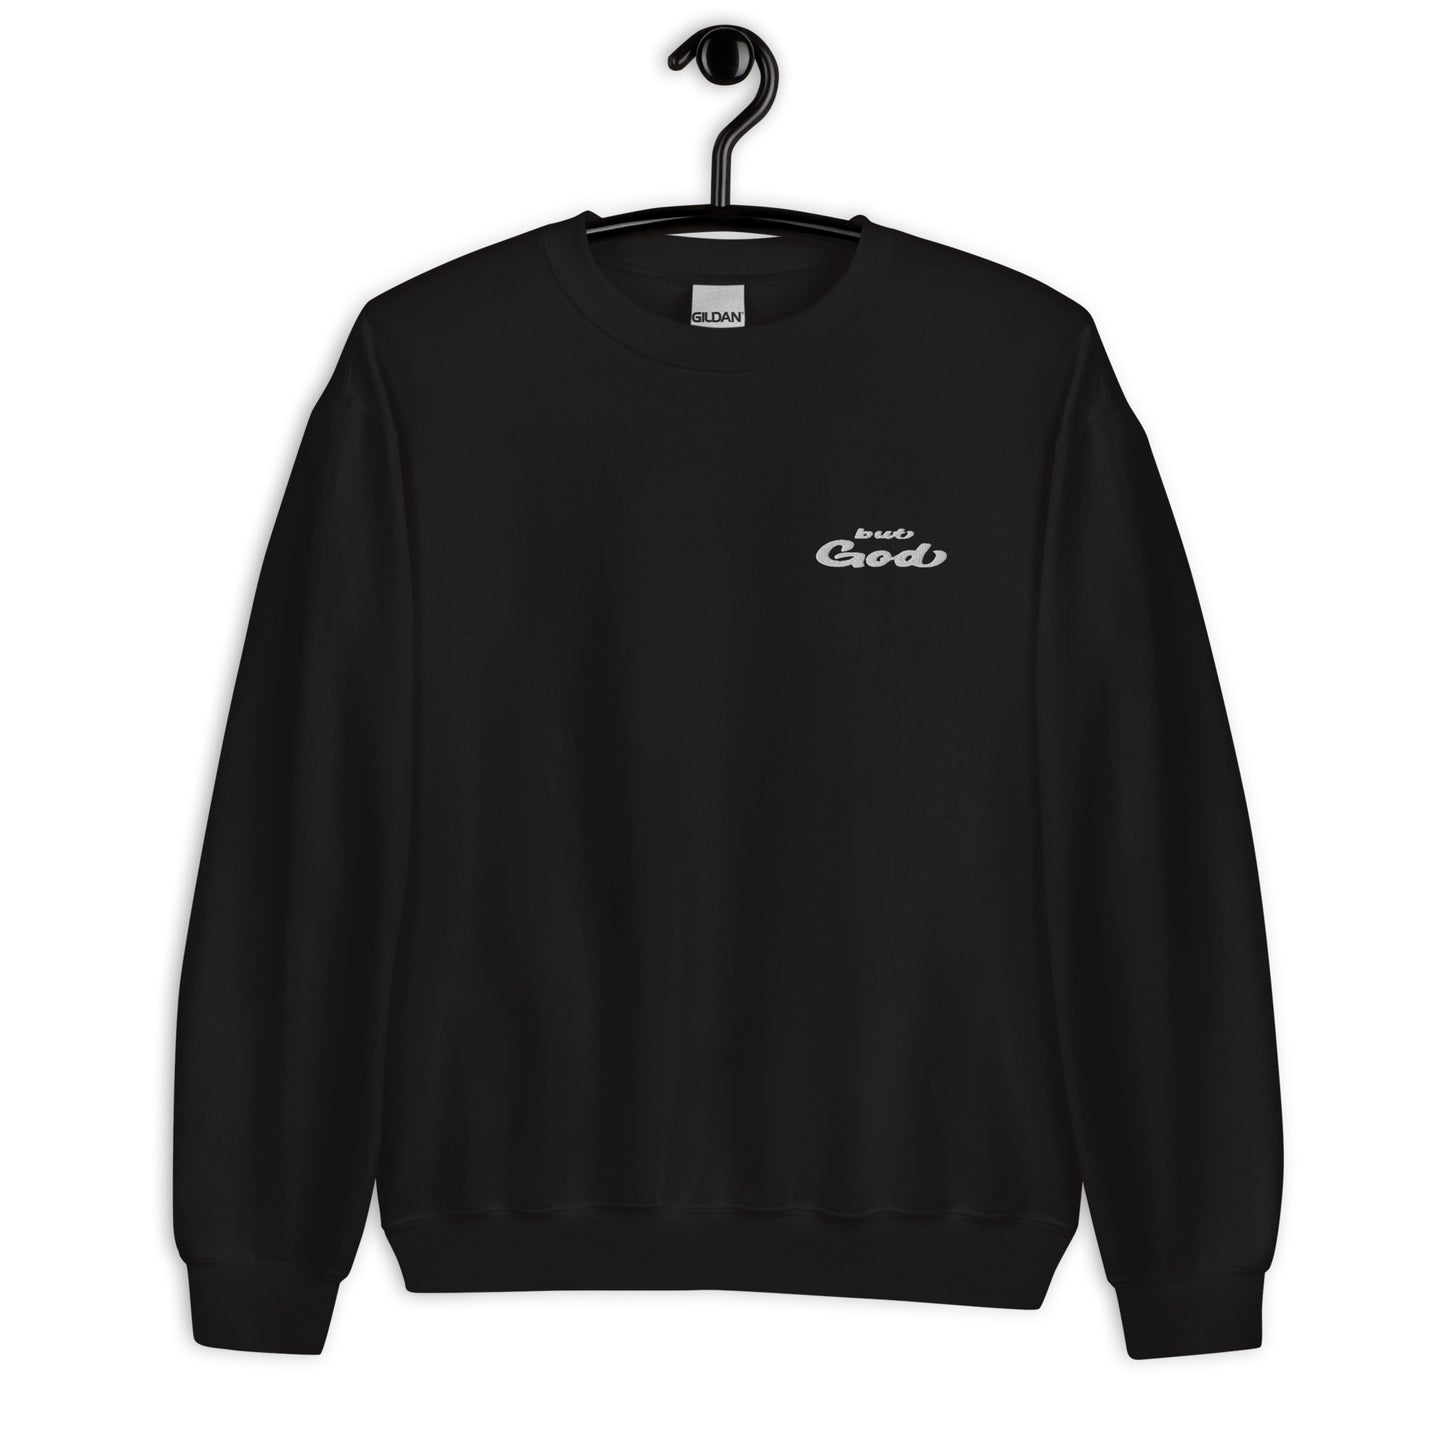 But God Embroidered Unisex Sweatshirt black on hanger